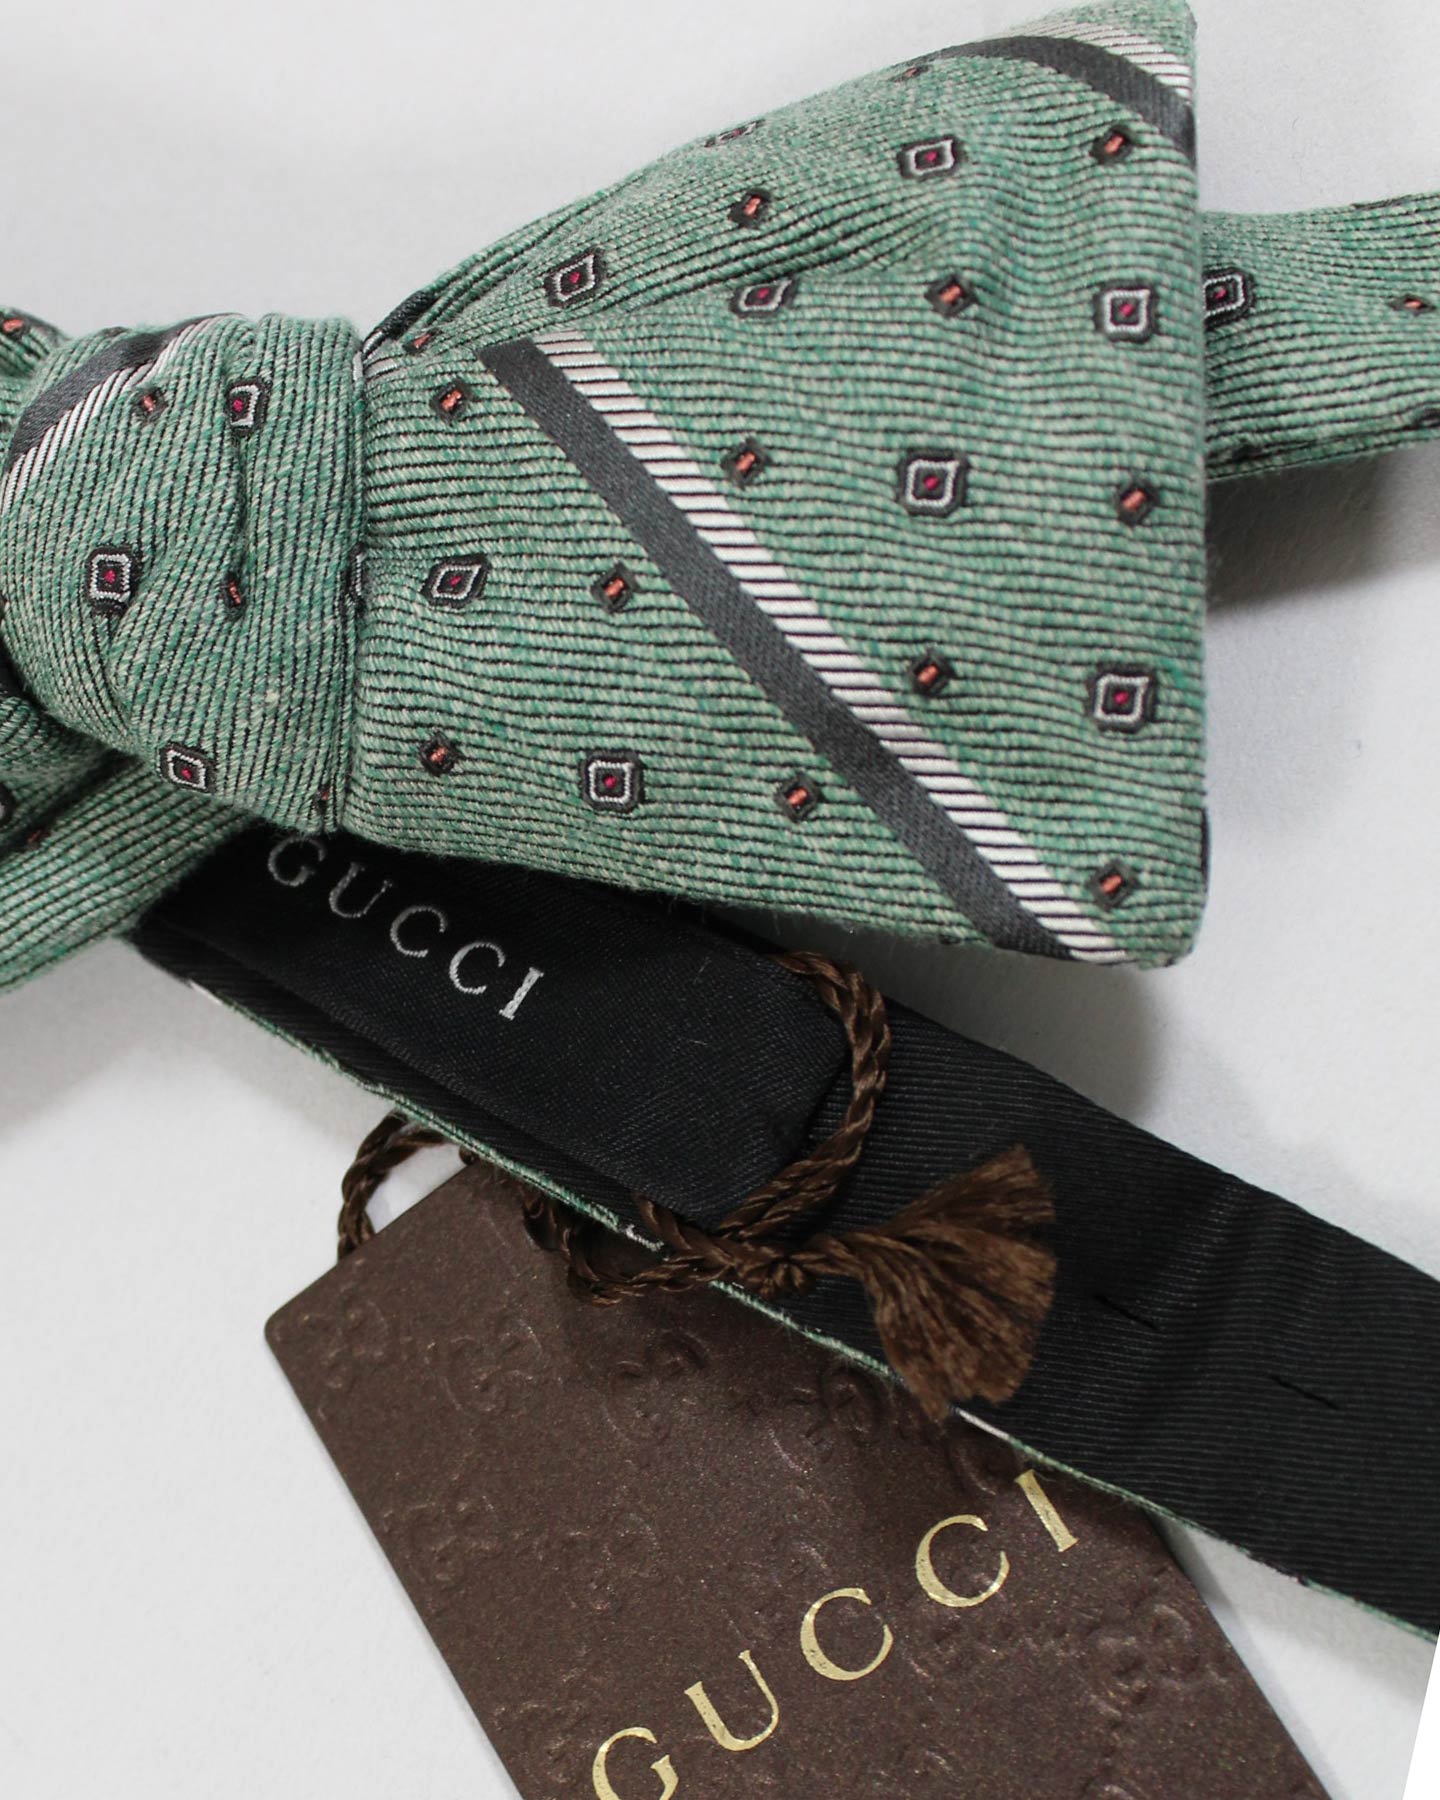 gucci bow tie gucci patented bowtie NWT #gucci - Depop